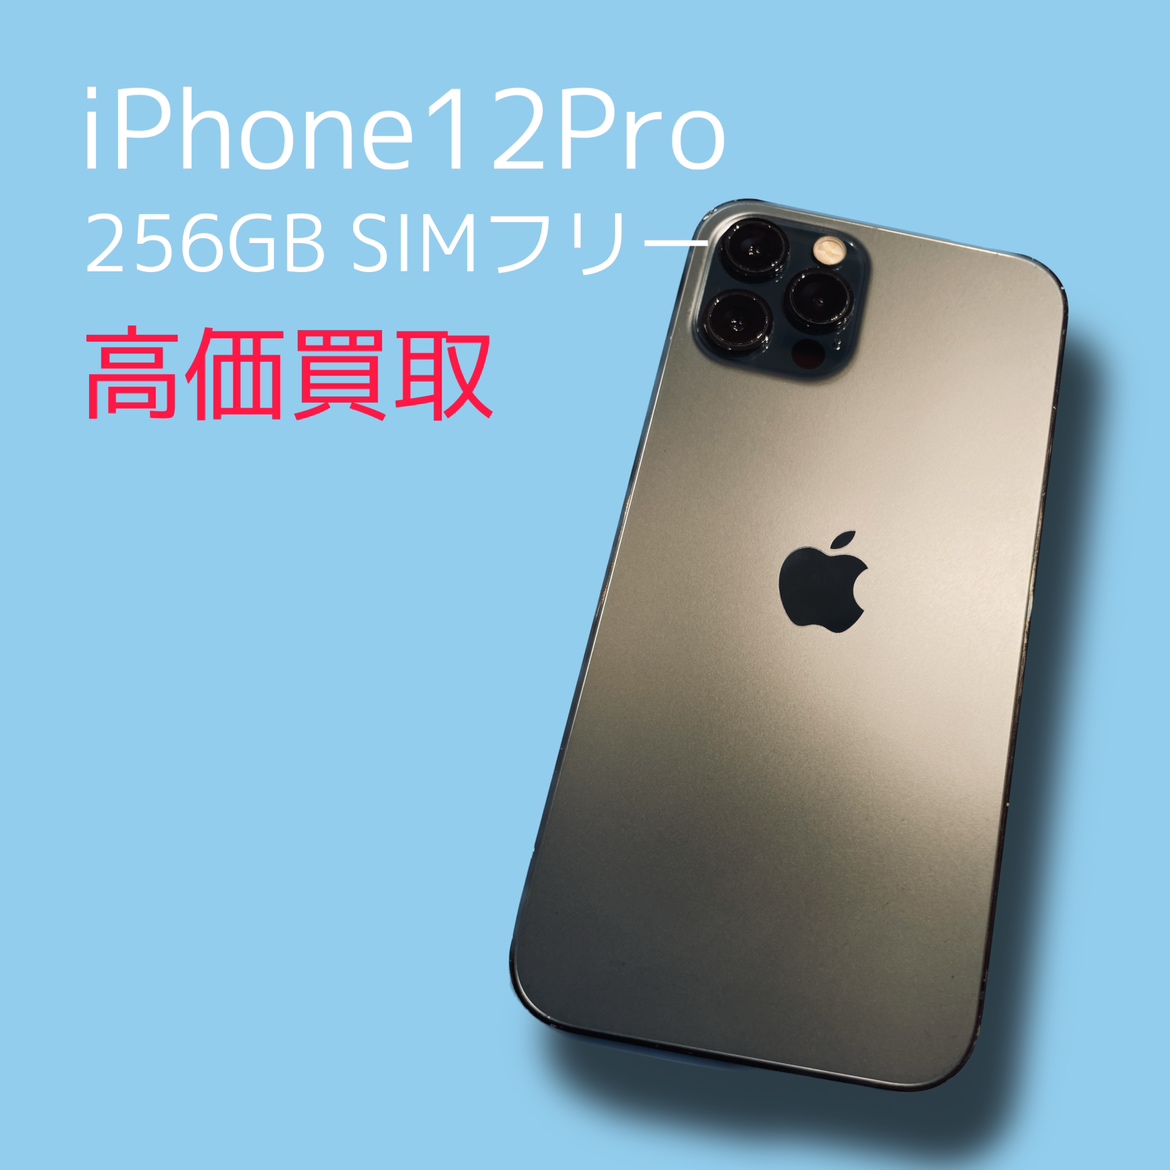 iPhone12Pro 256GB SIMフリー【天神地下街店】